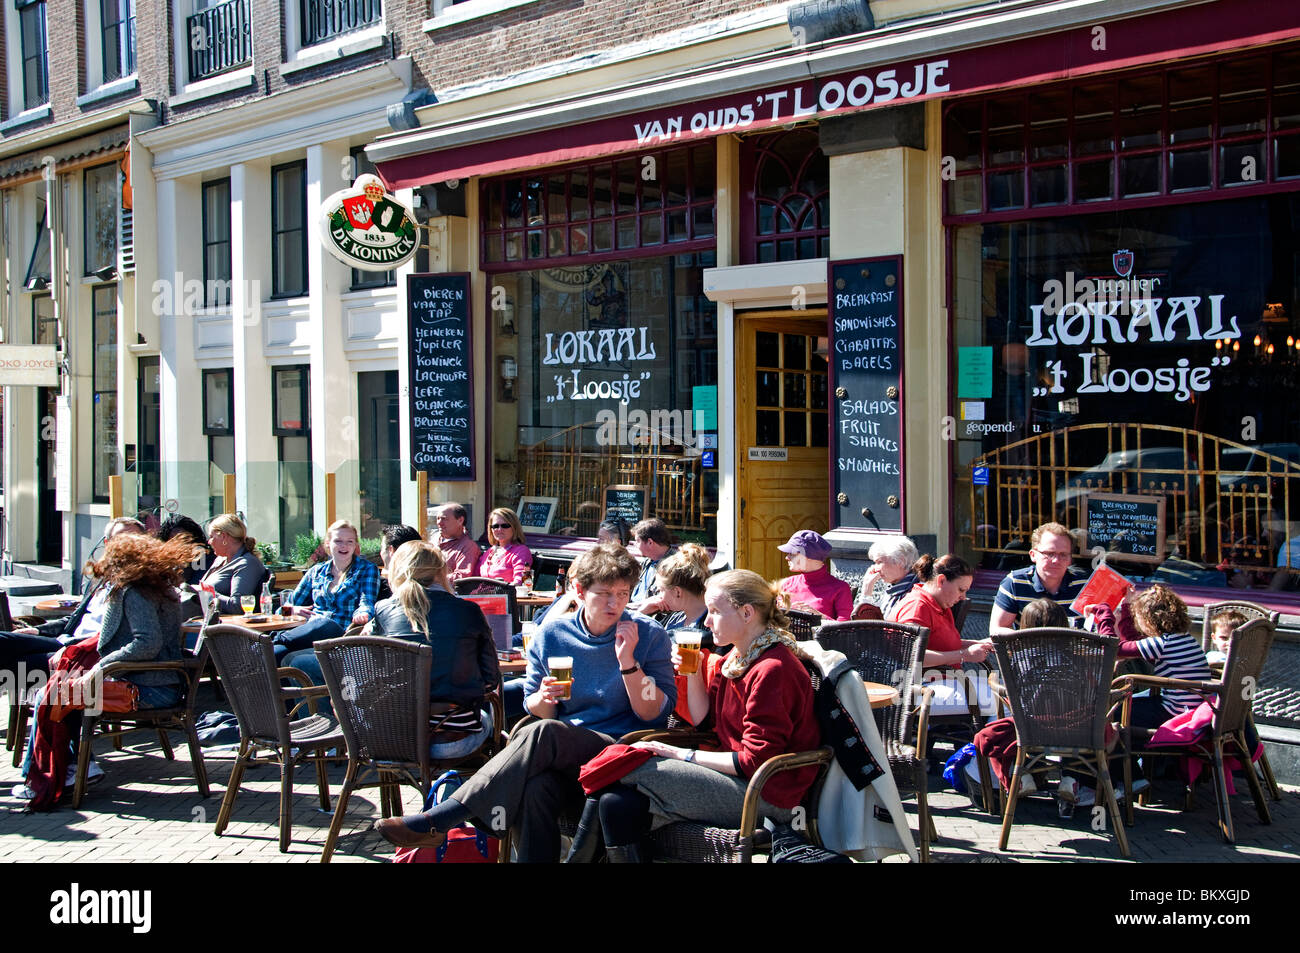 Lokaal `t Loosje  Nieuwmarkt cafe Amsterdam Cafe Restaurant  bar pub Netherlands Stock Photo